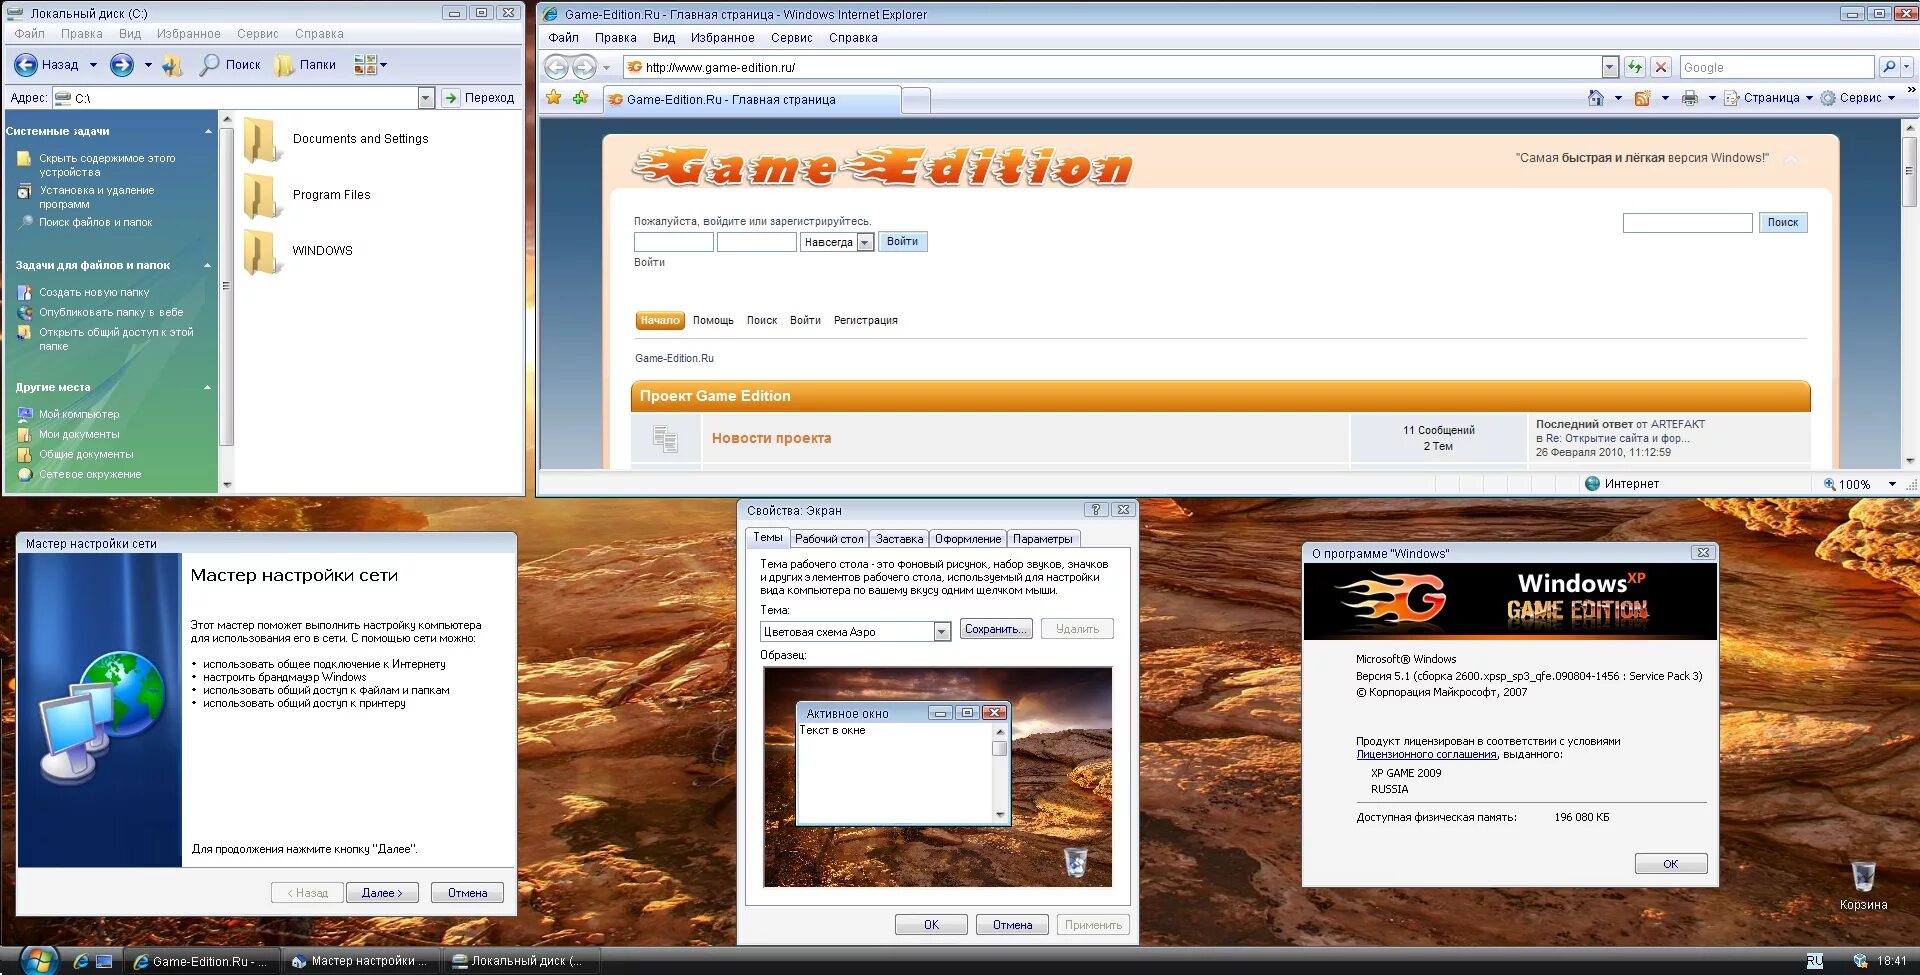 Windows game Edition. XP game Edition. Виндовс хр game Edition. Windows XP game Edition 2009. Game edition обзор